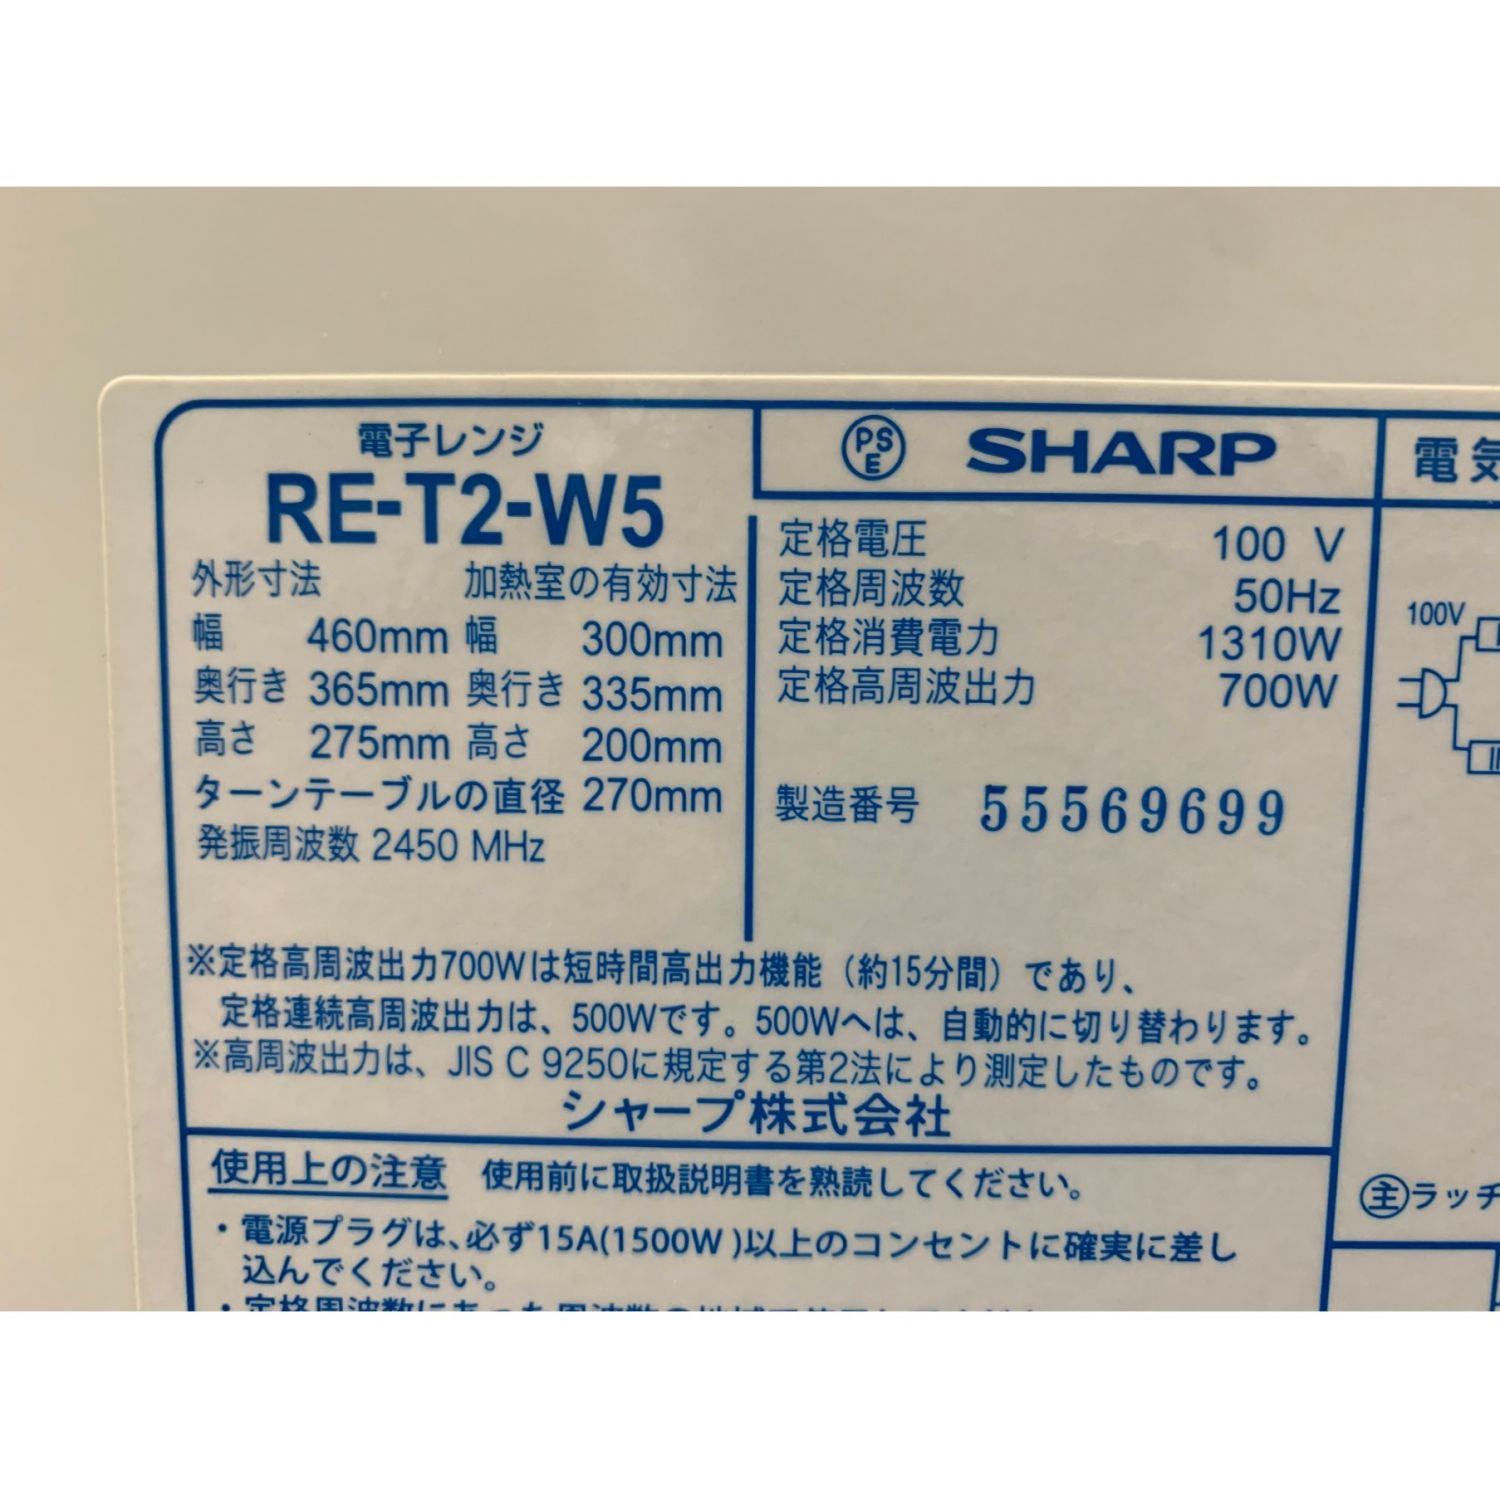 SHARP RE-TD2C 電子レンジ【美品】取説あります